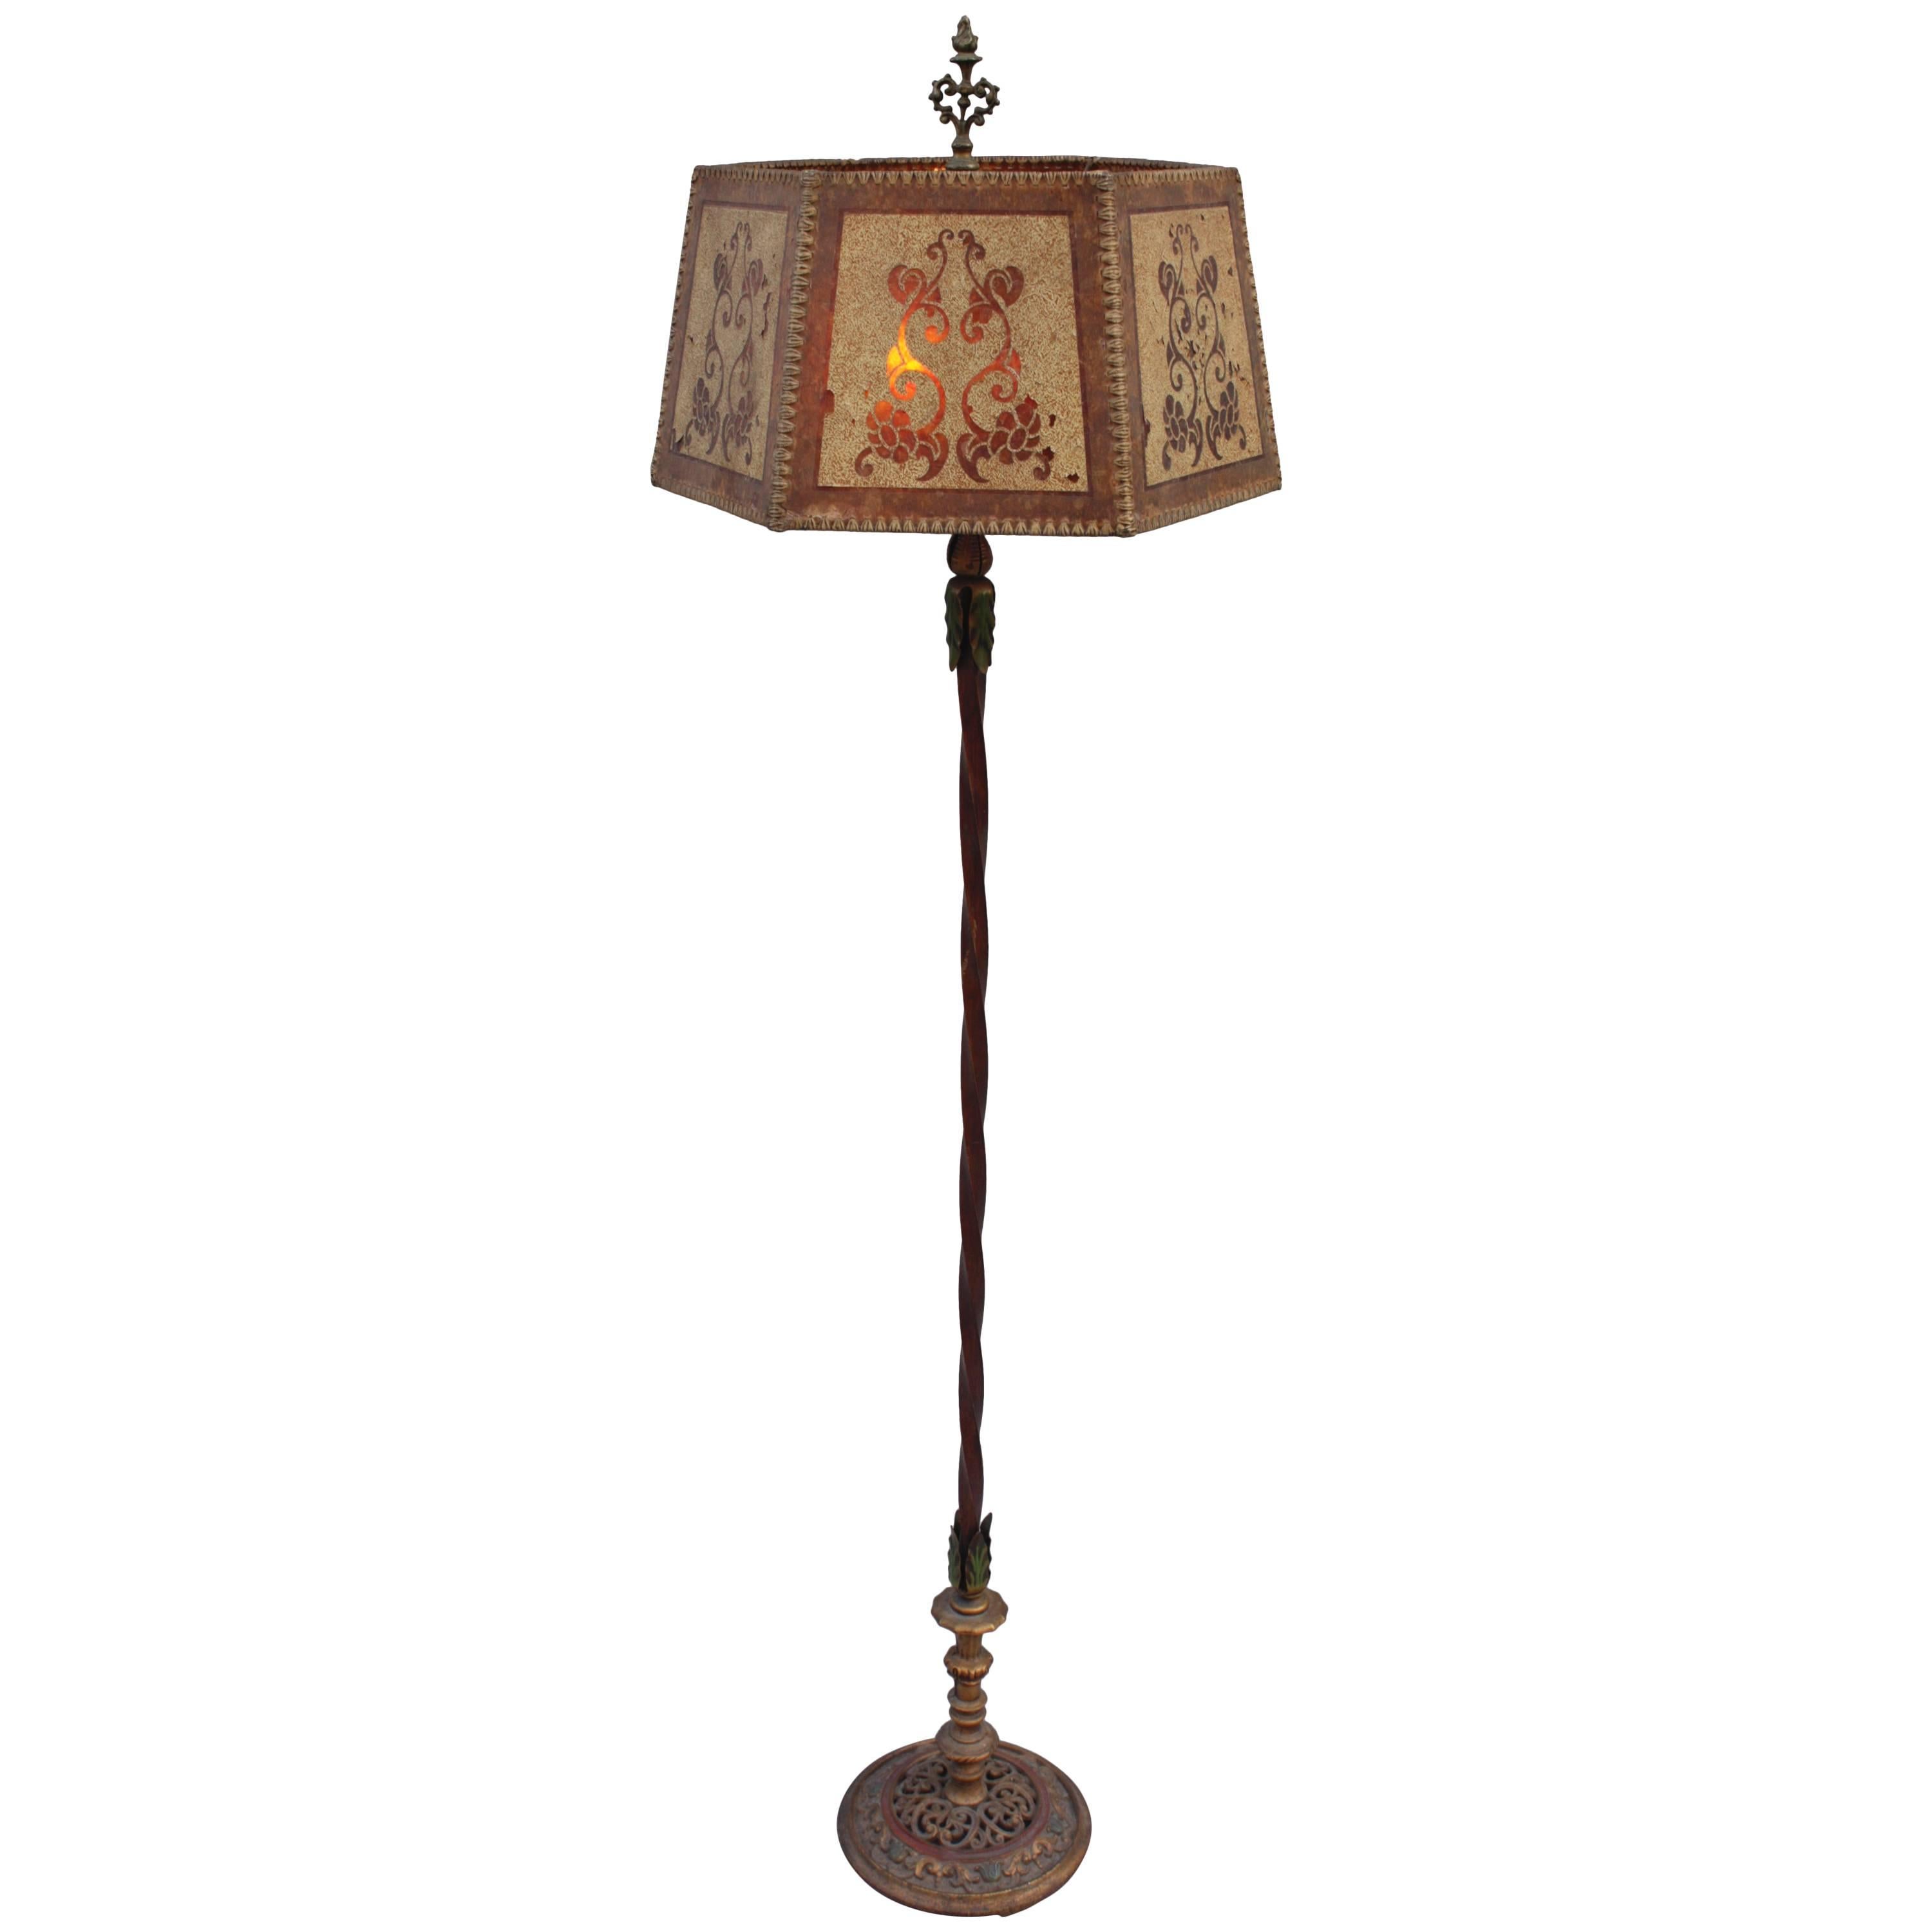 1920s Elegant Spanish Revival Floor Lamp